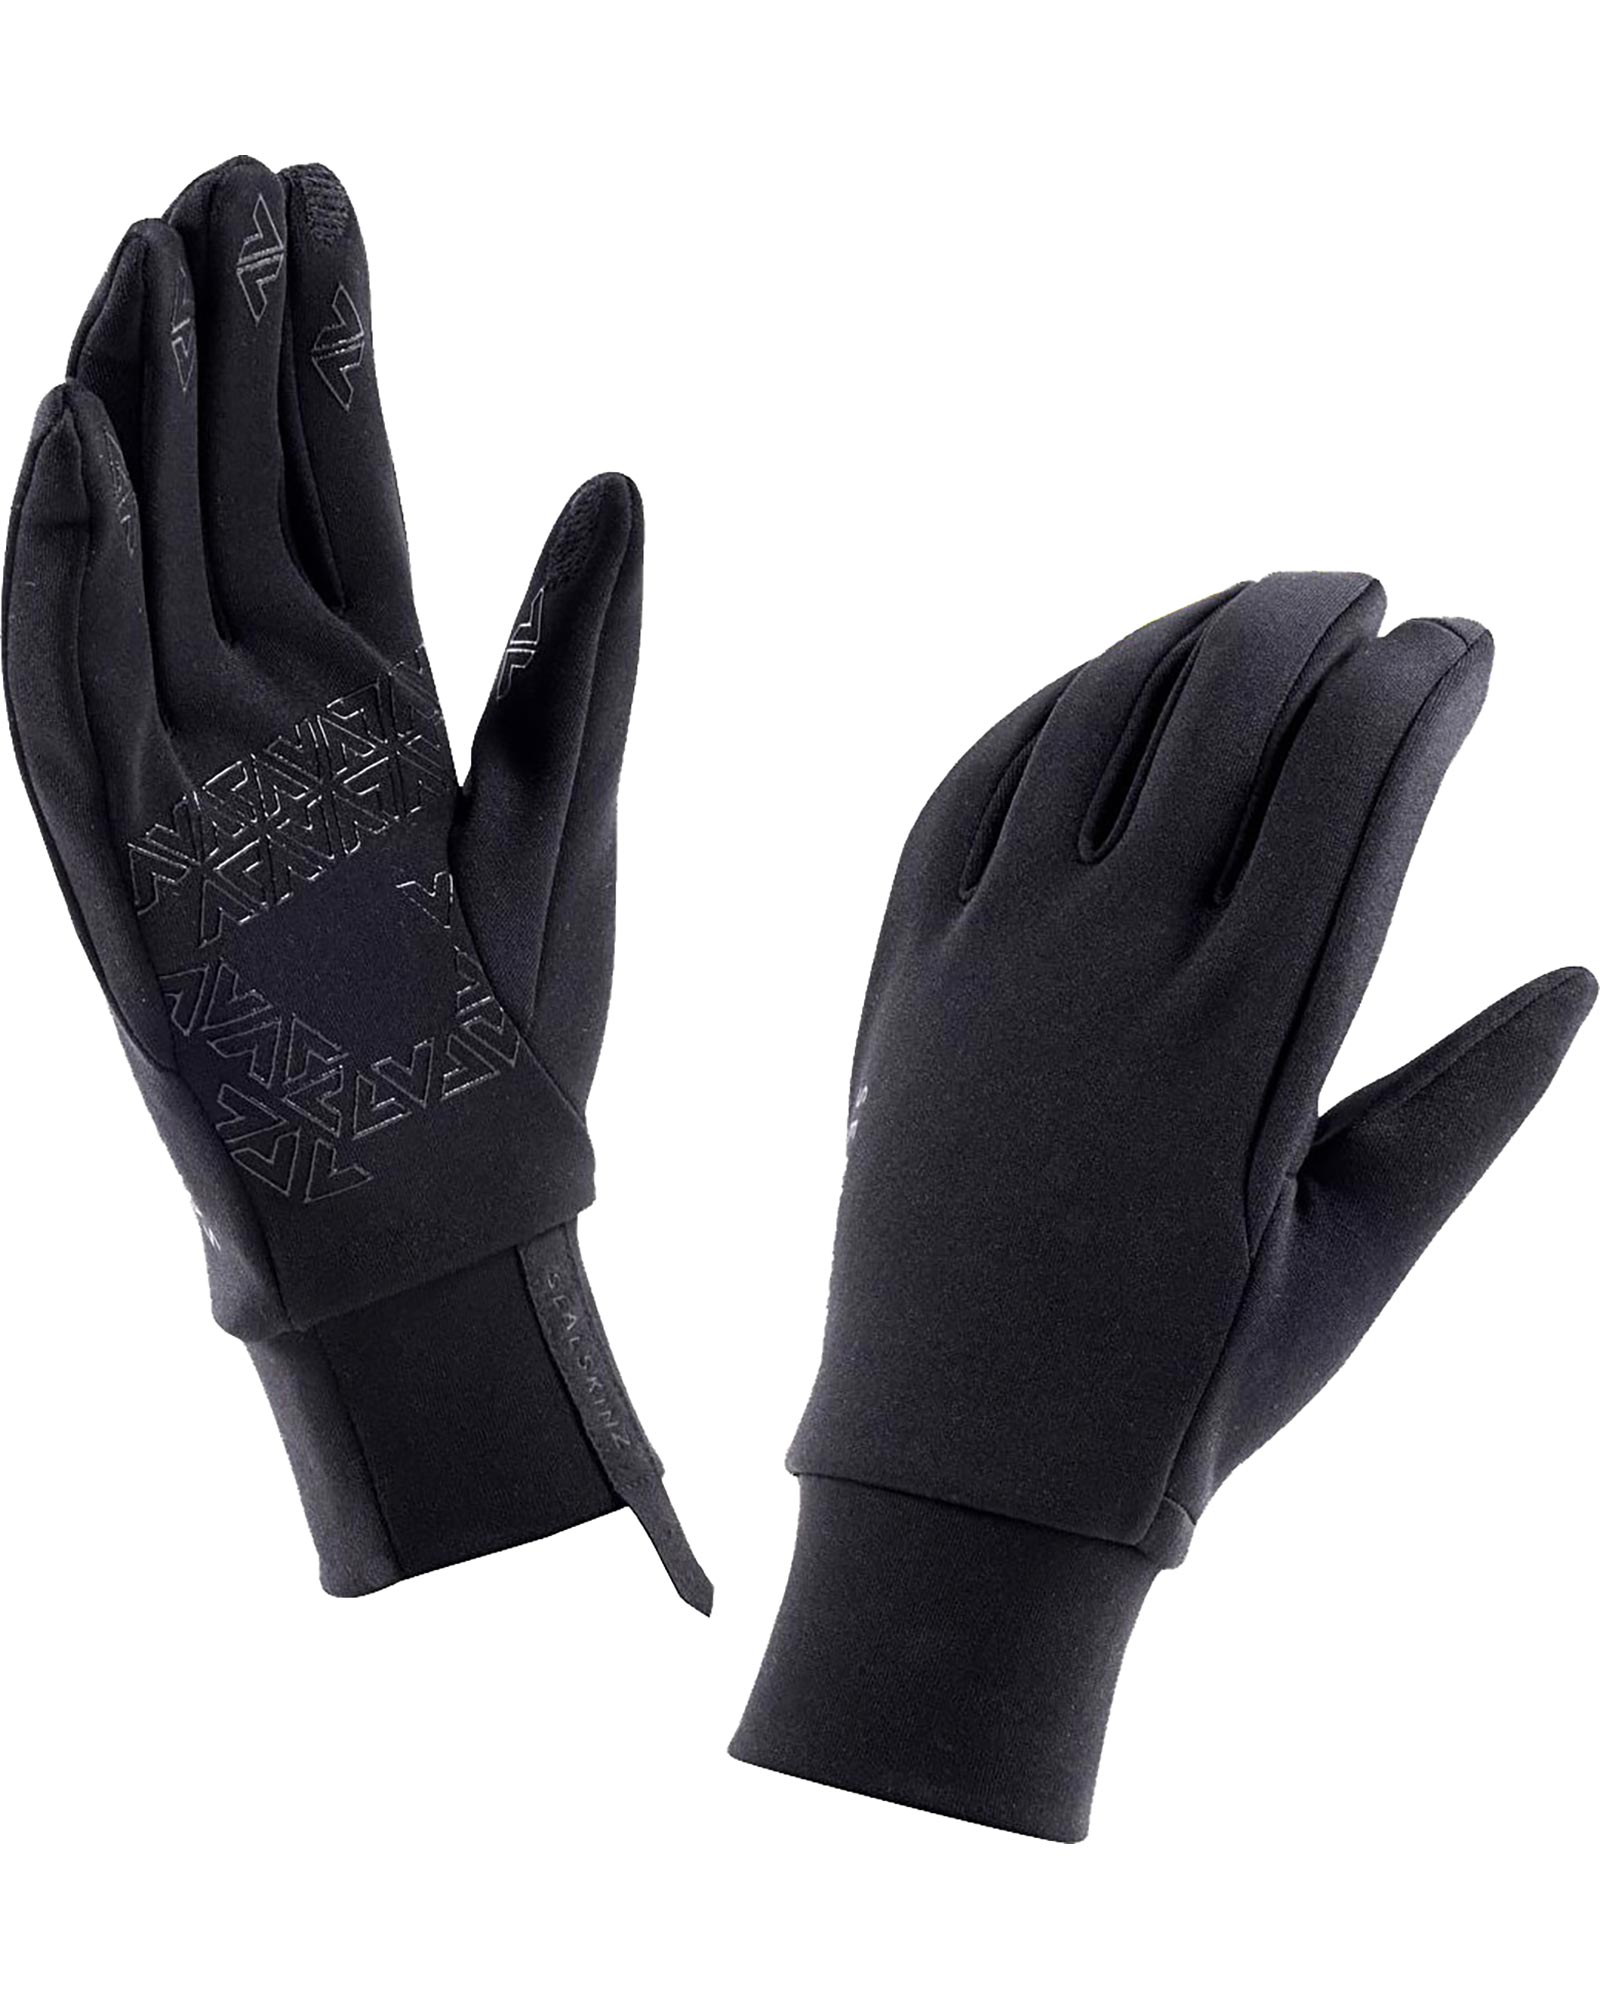 SealSkinz Stretch Nano Women's Gloves